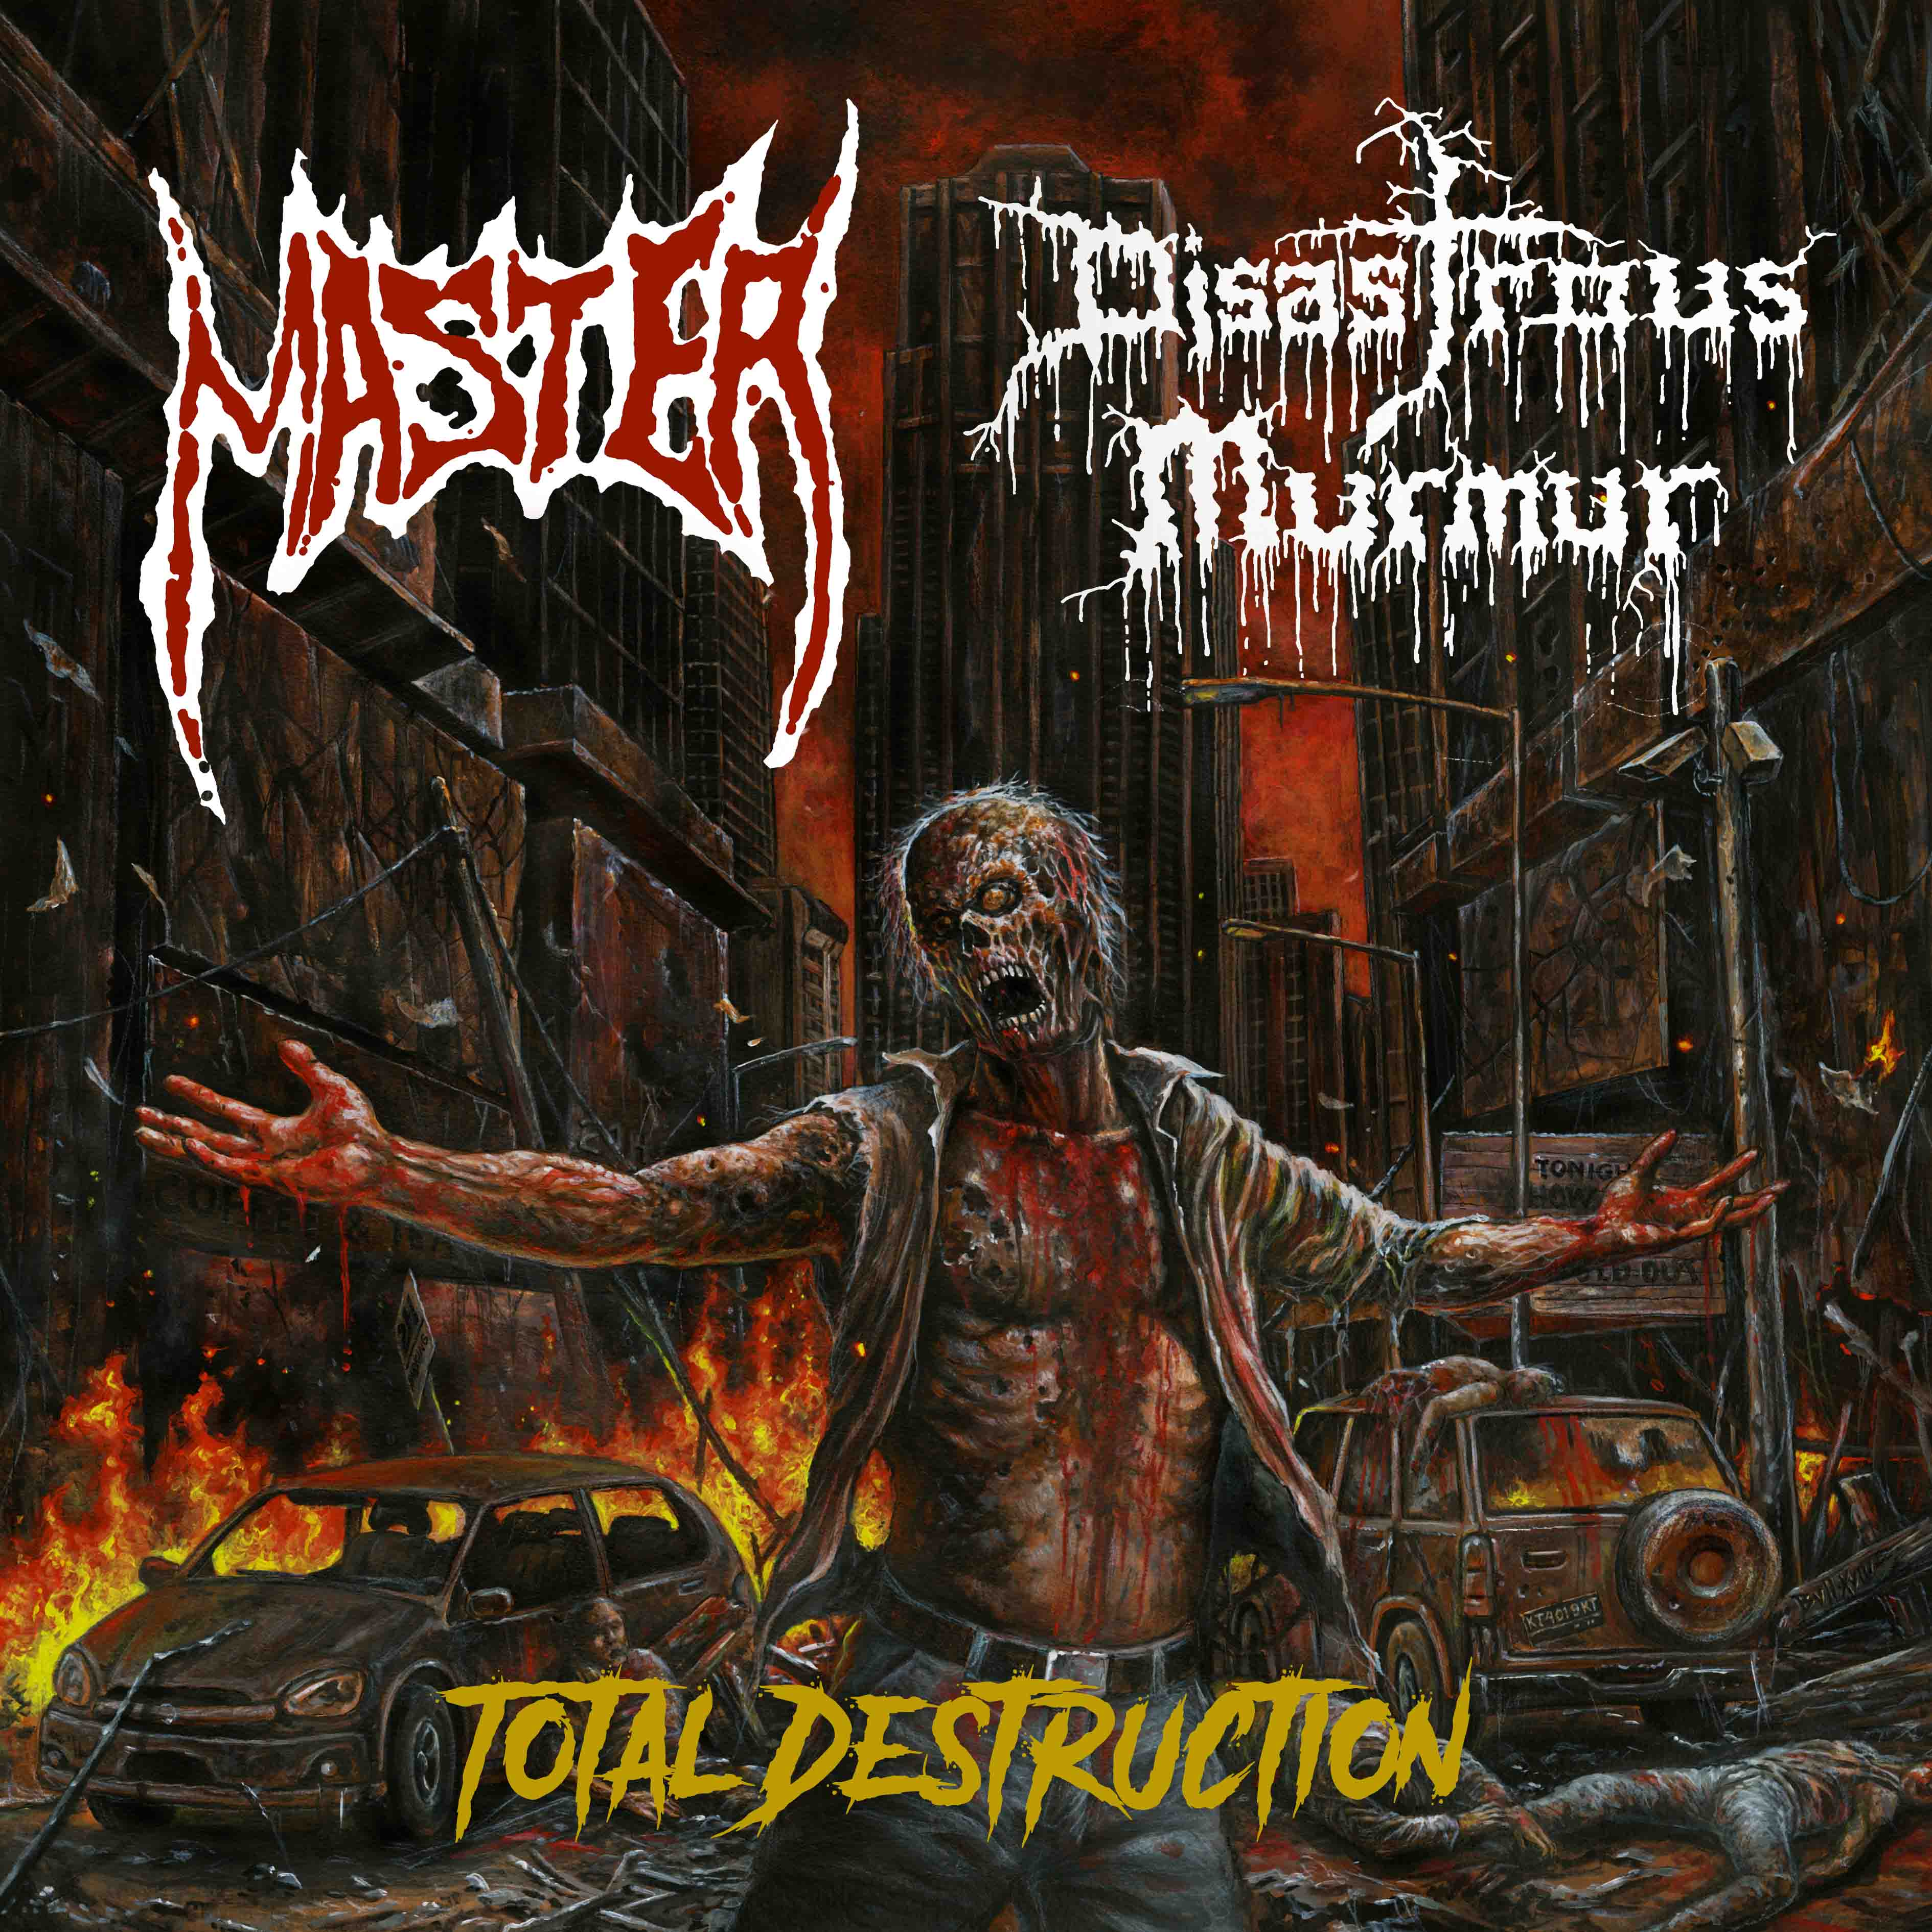 Total - Destruction (Vinyl) - Murmur/Master Disastrous